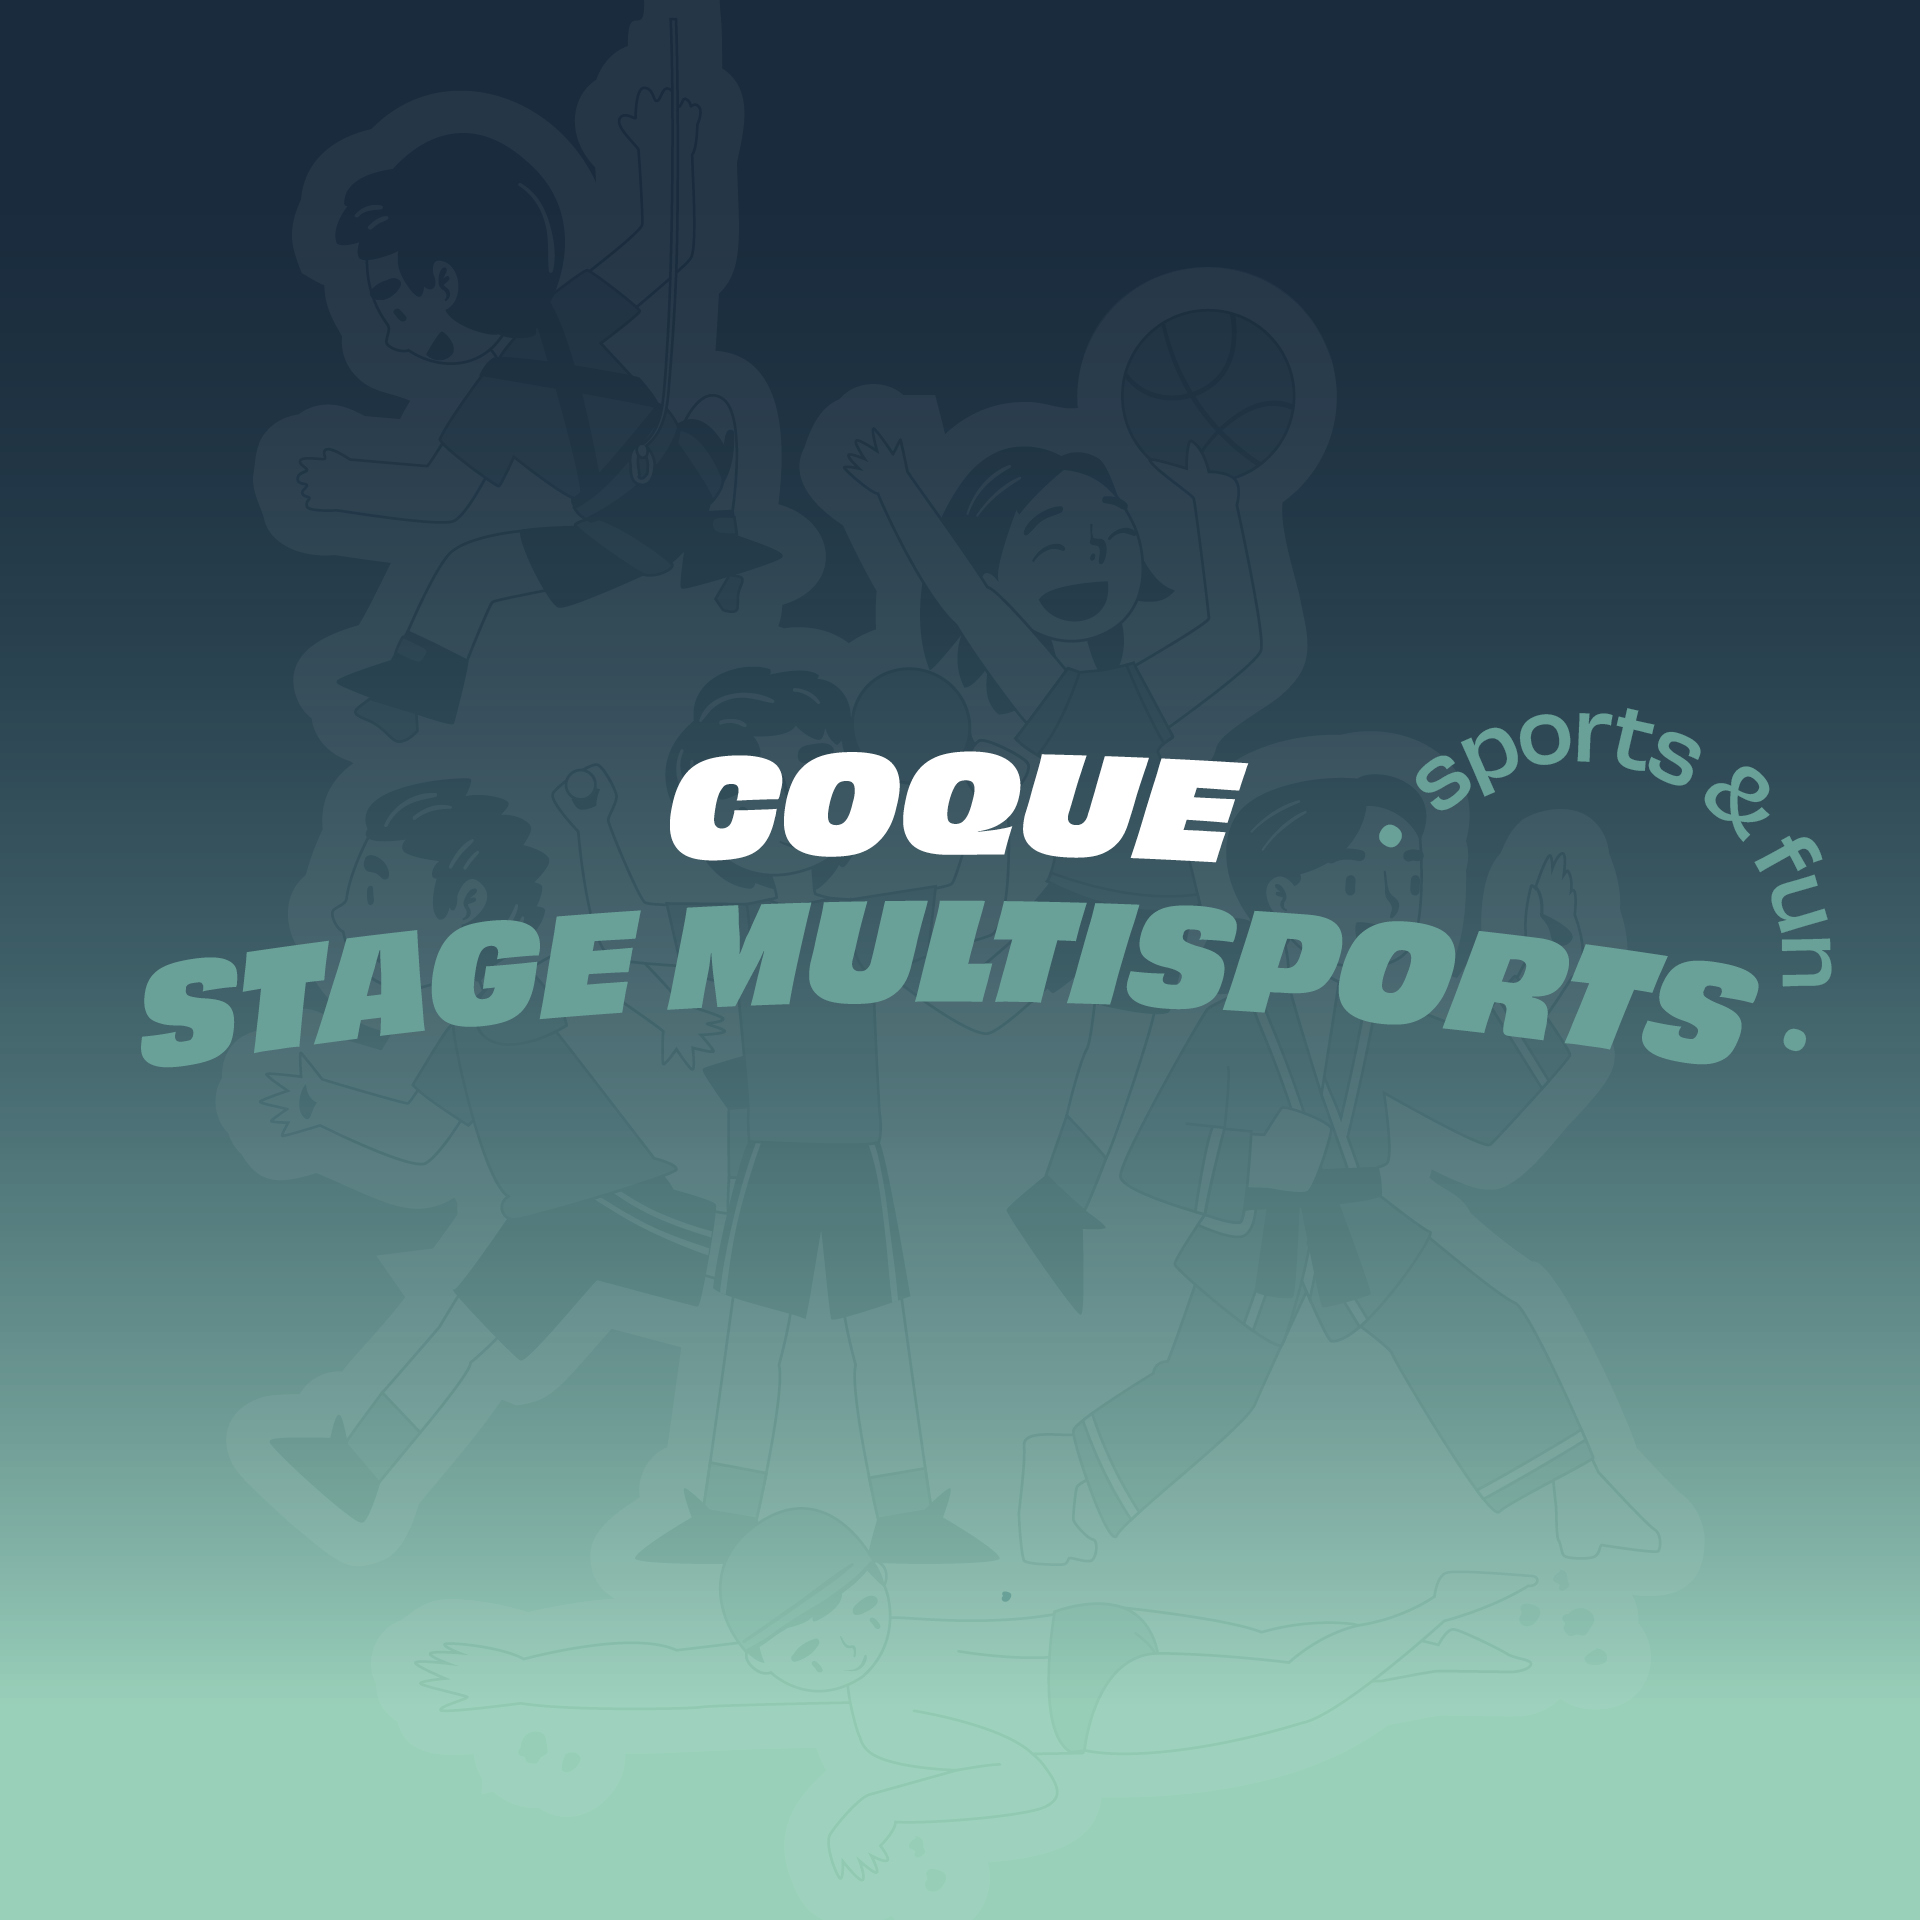 Stage Multisports